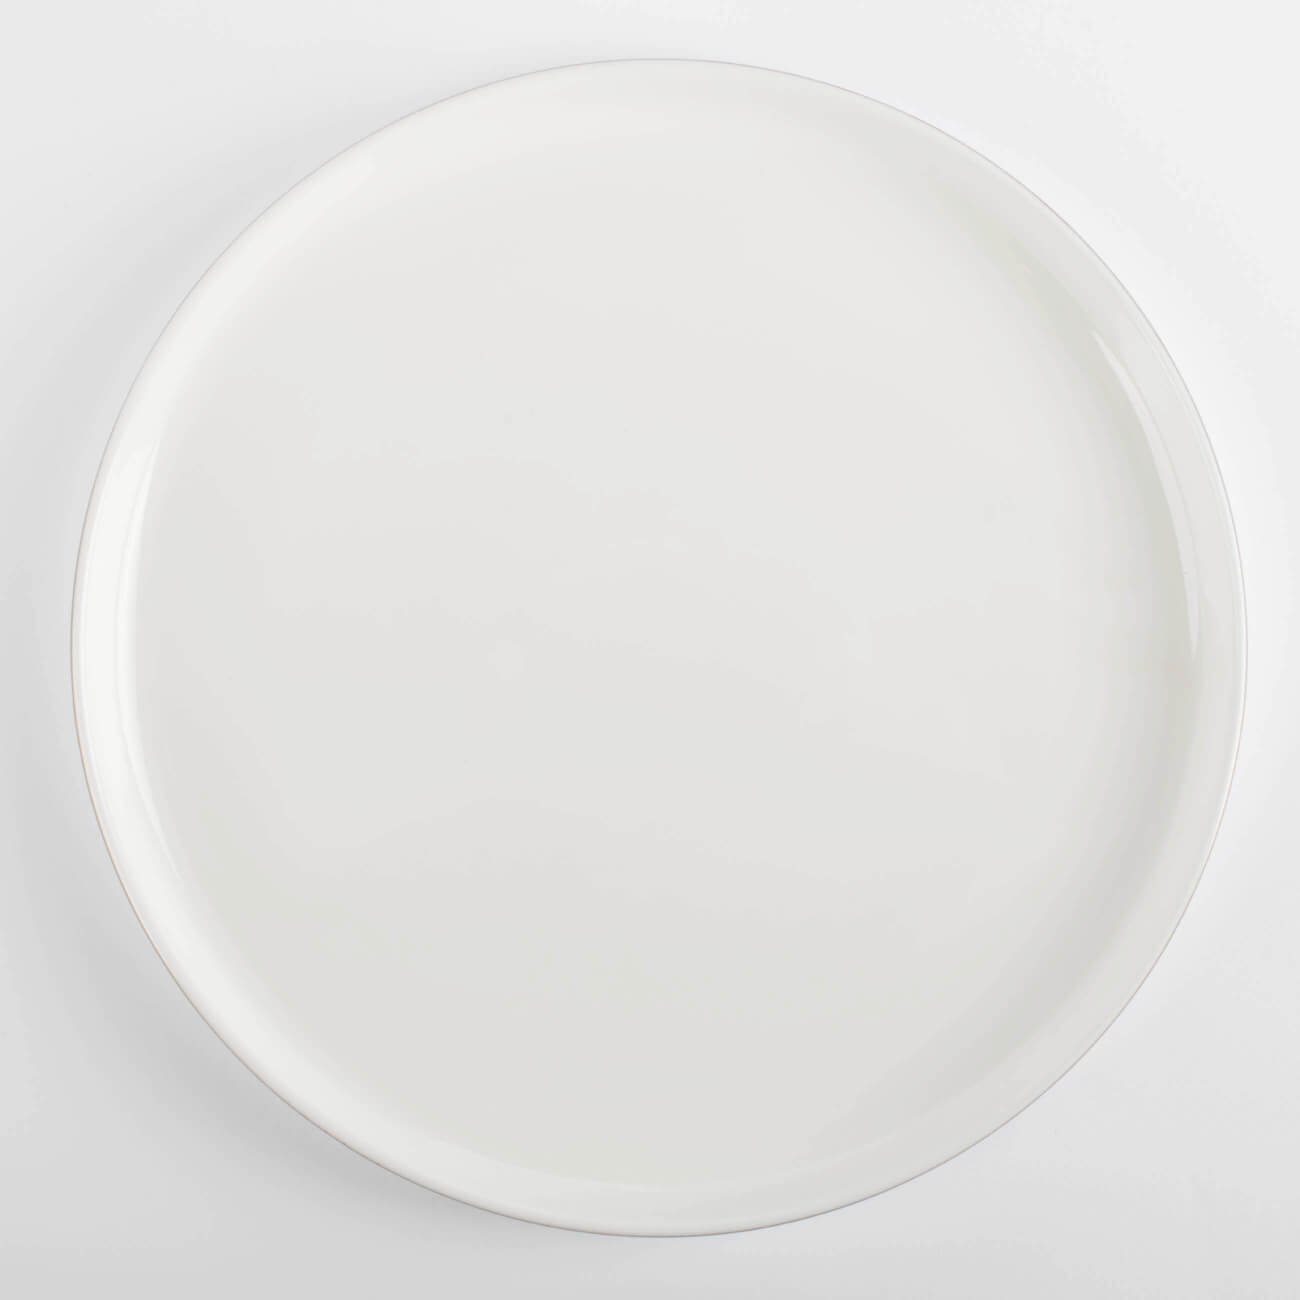 Тарелка обеденная, 26 см, фарфор F, белая, Ideal gold тарелка обеденная детская 19 см 3 отд бамбук кот cat